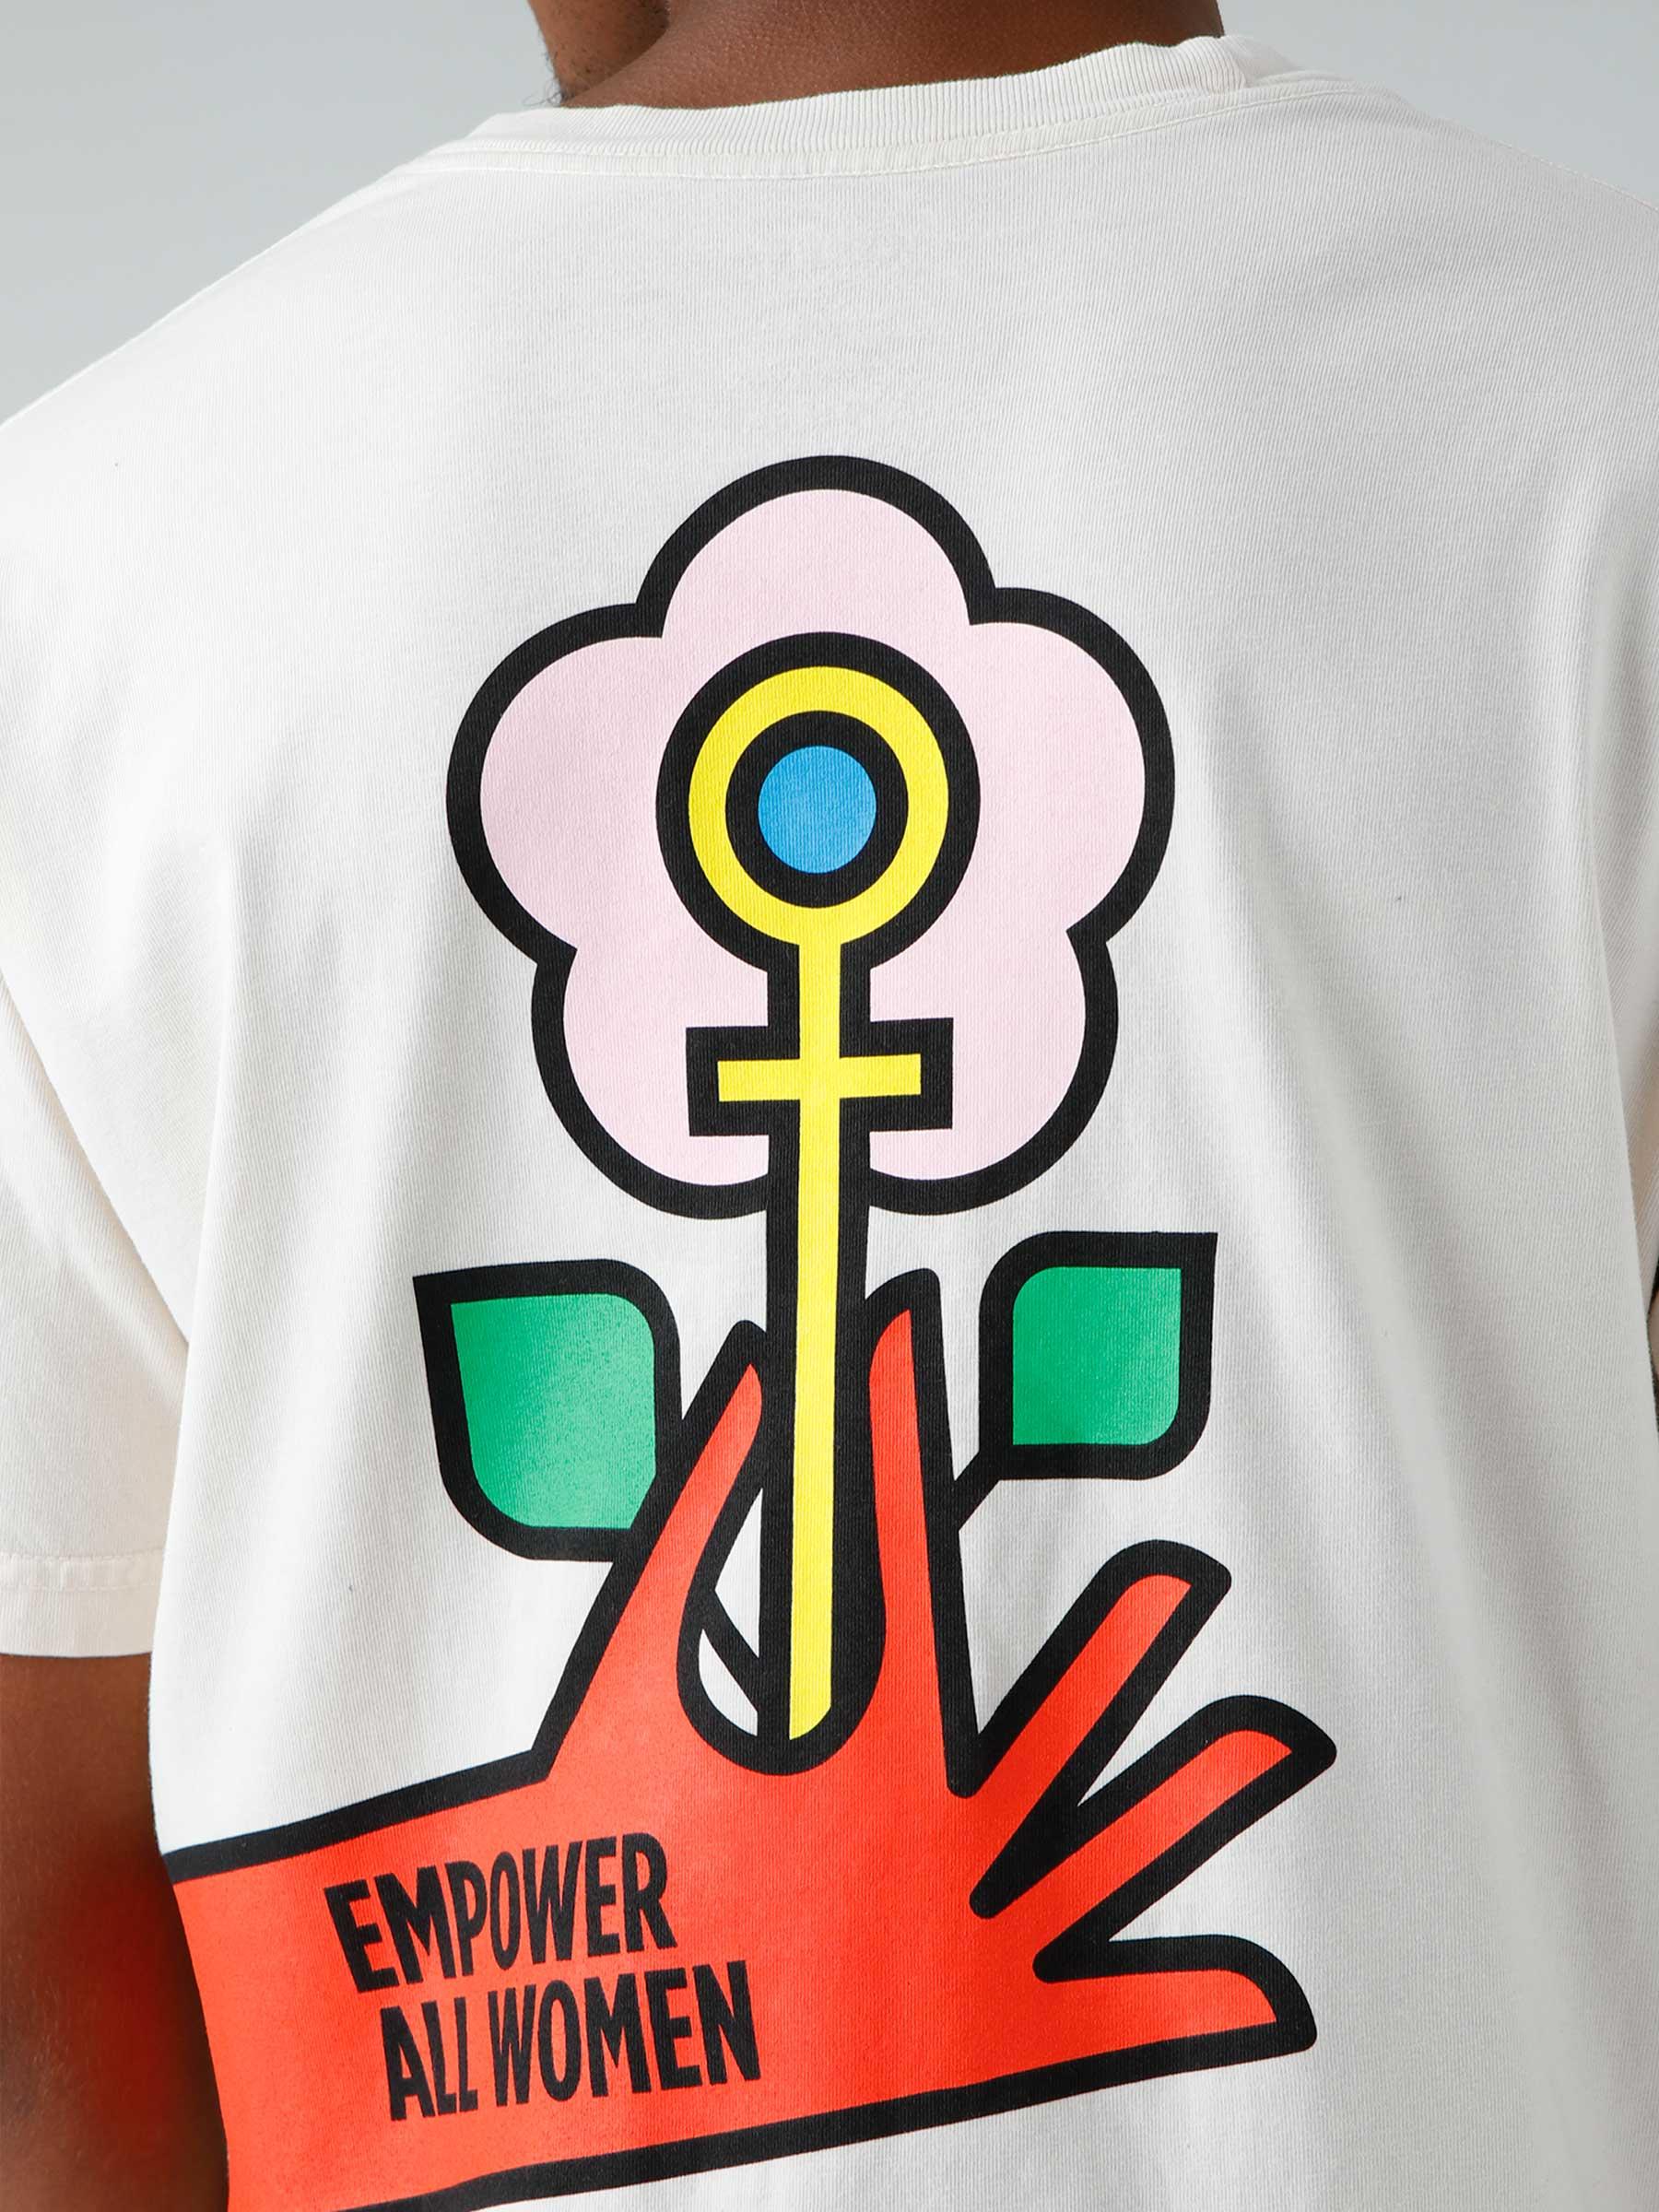 Empower All Women T-shirt Sago 163003091